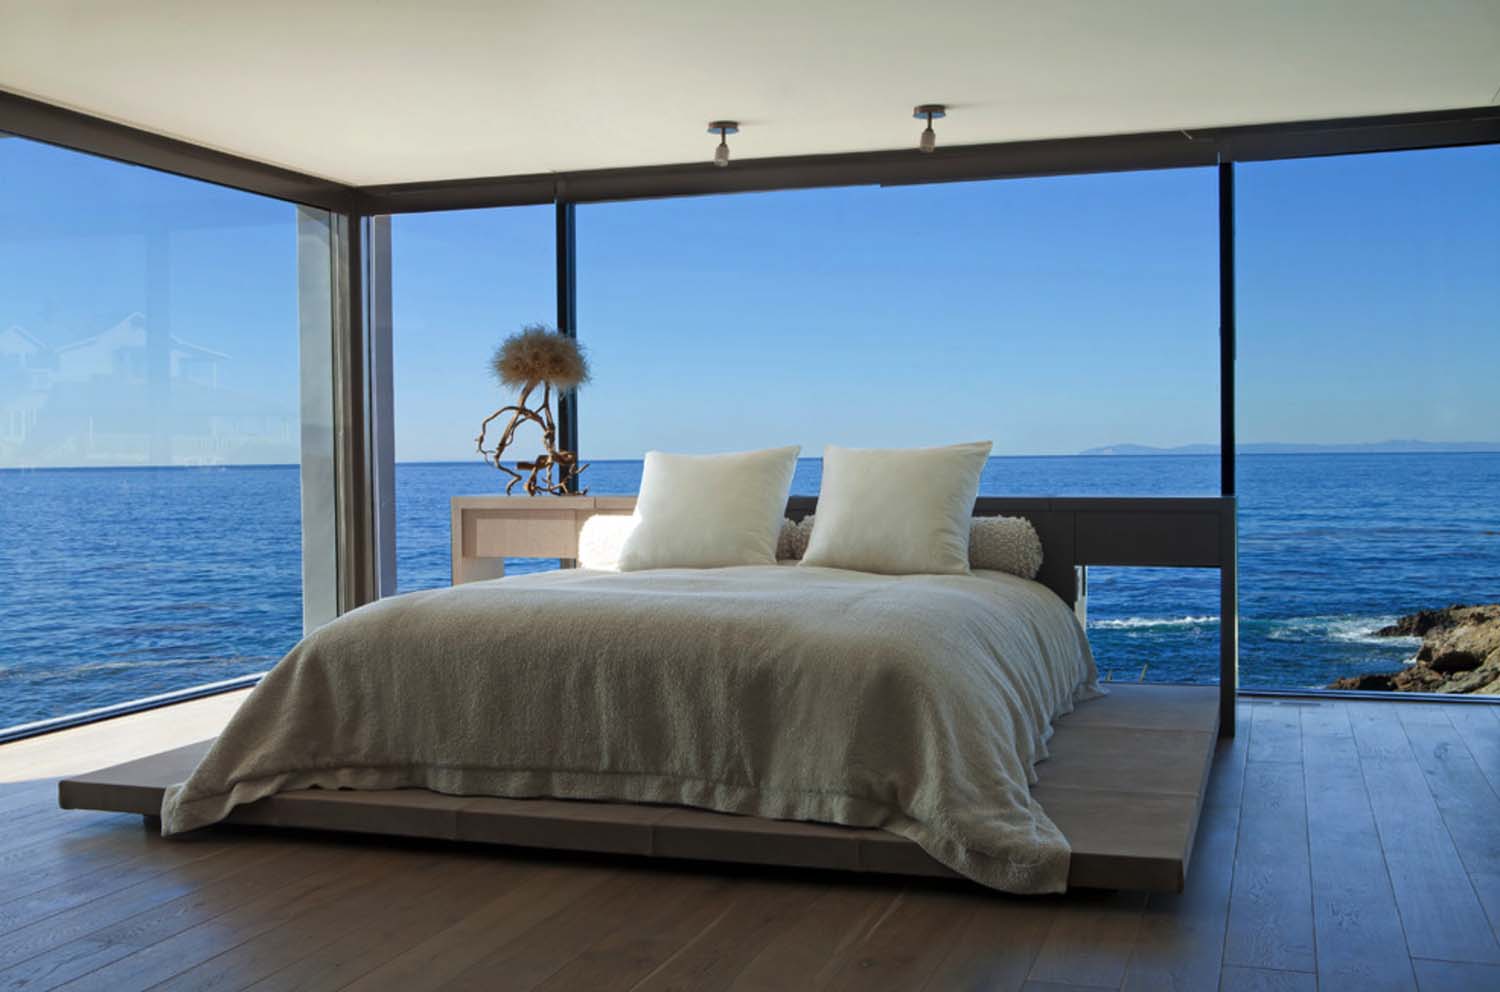 Bedroom With Ocean Views-23-1 Kindesign